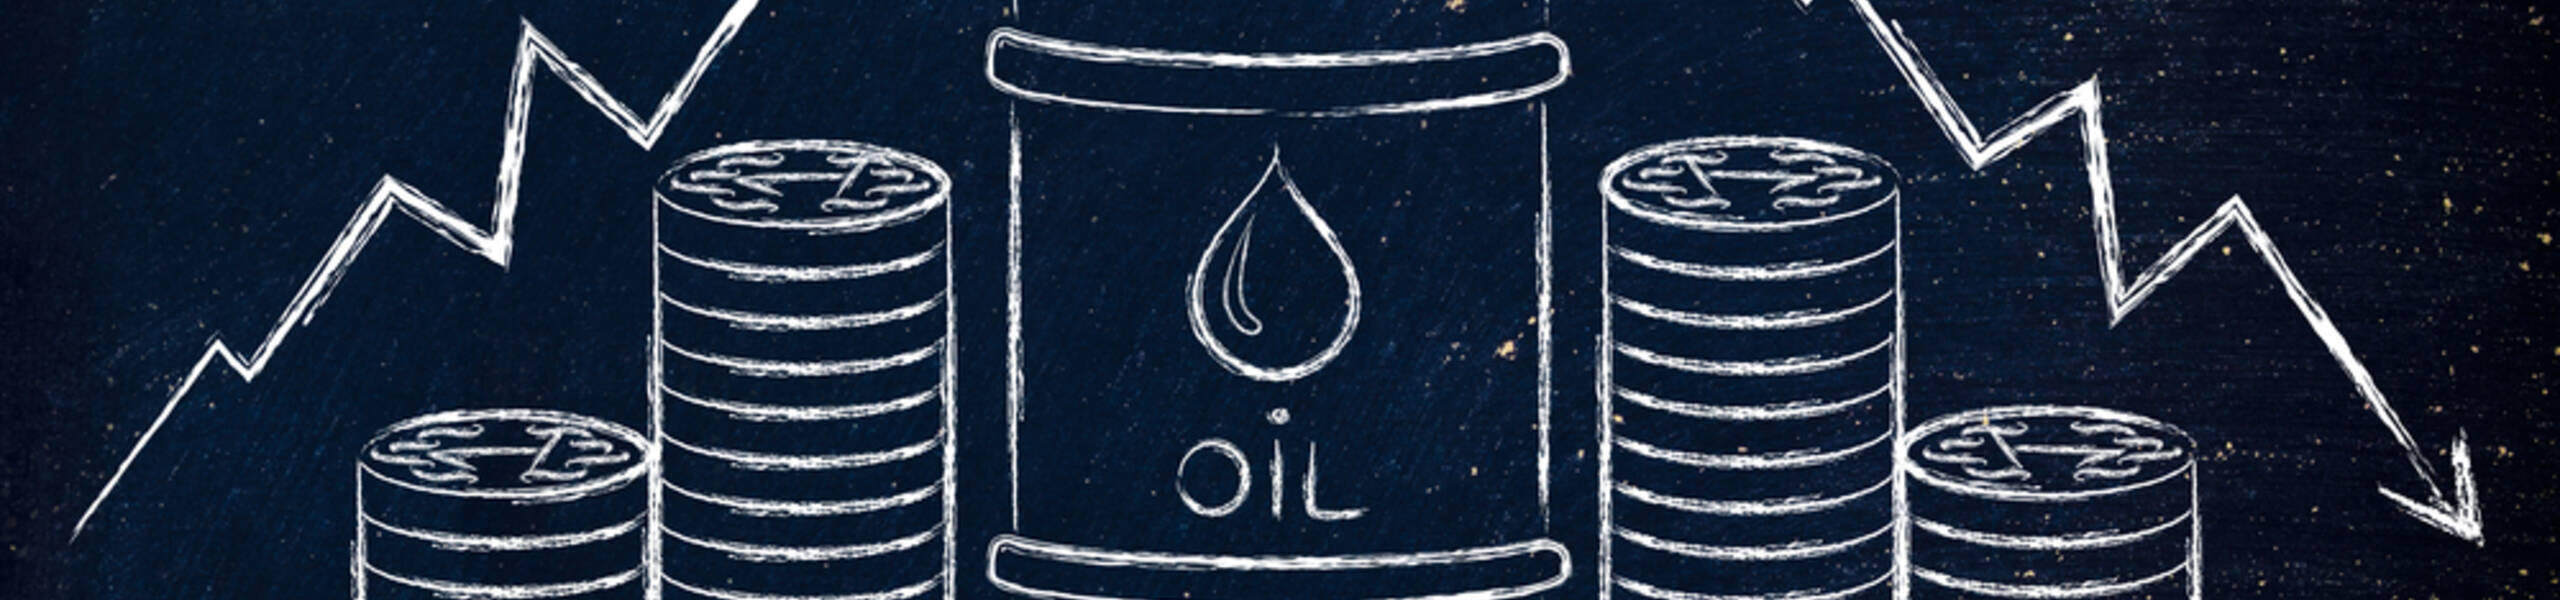 WTI oil may push higher